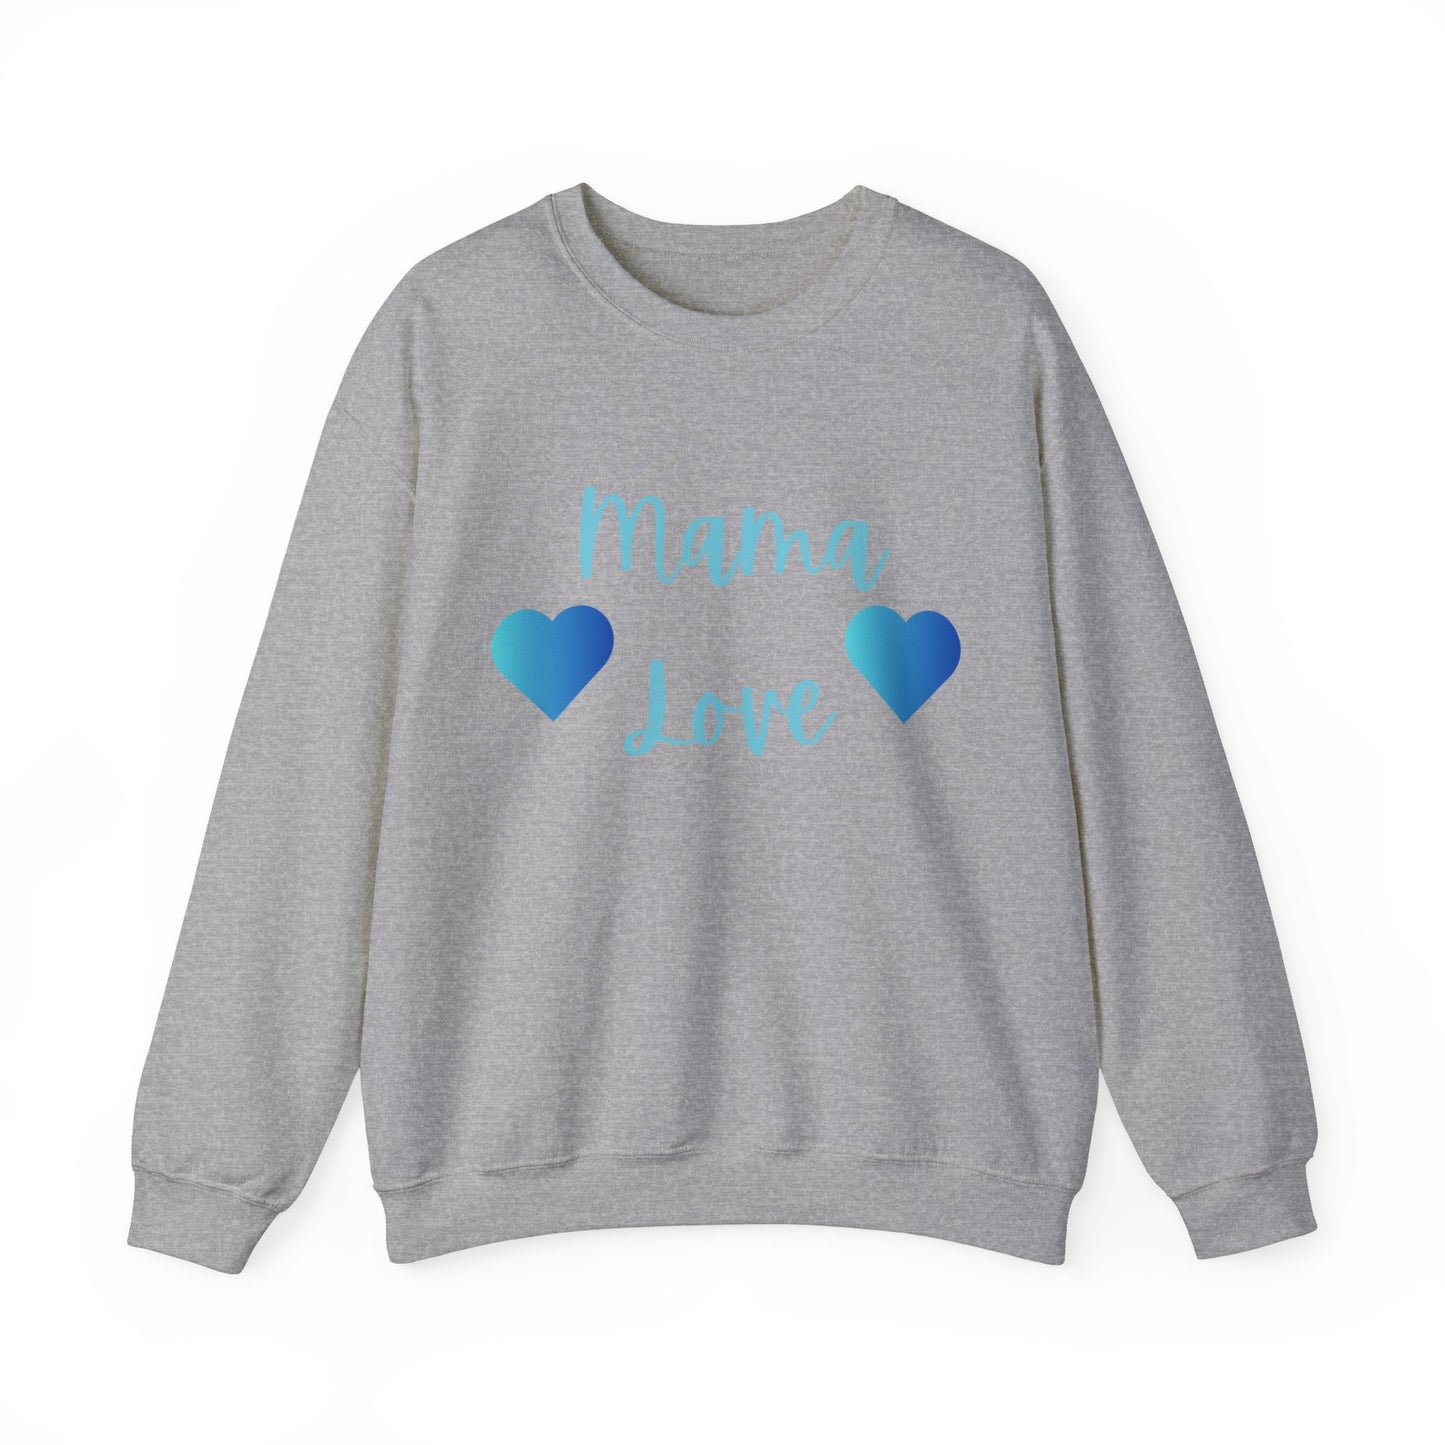 Mama Love Sweatshirt Blue